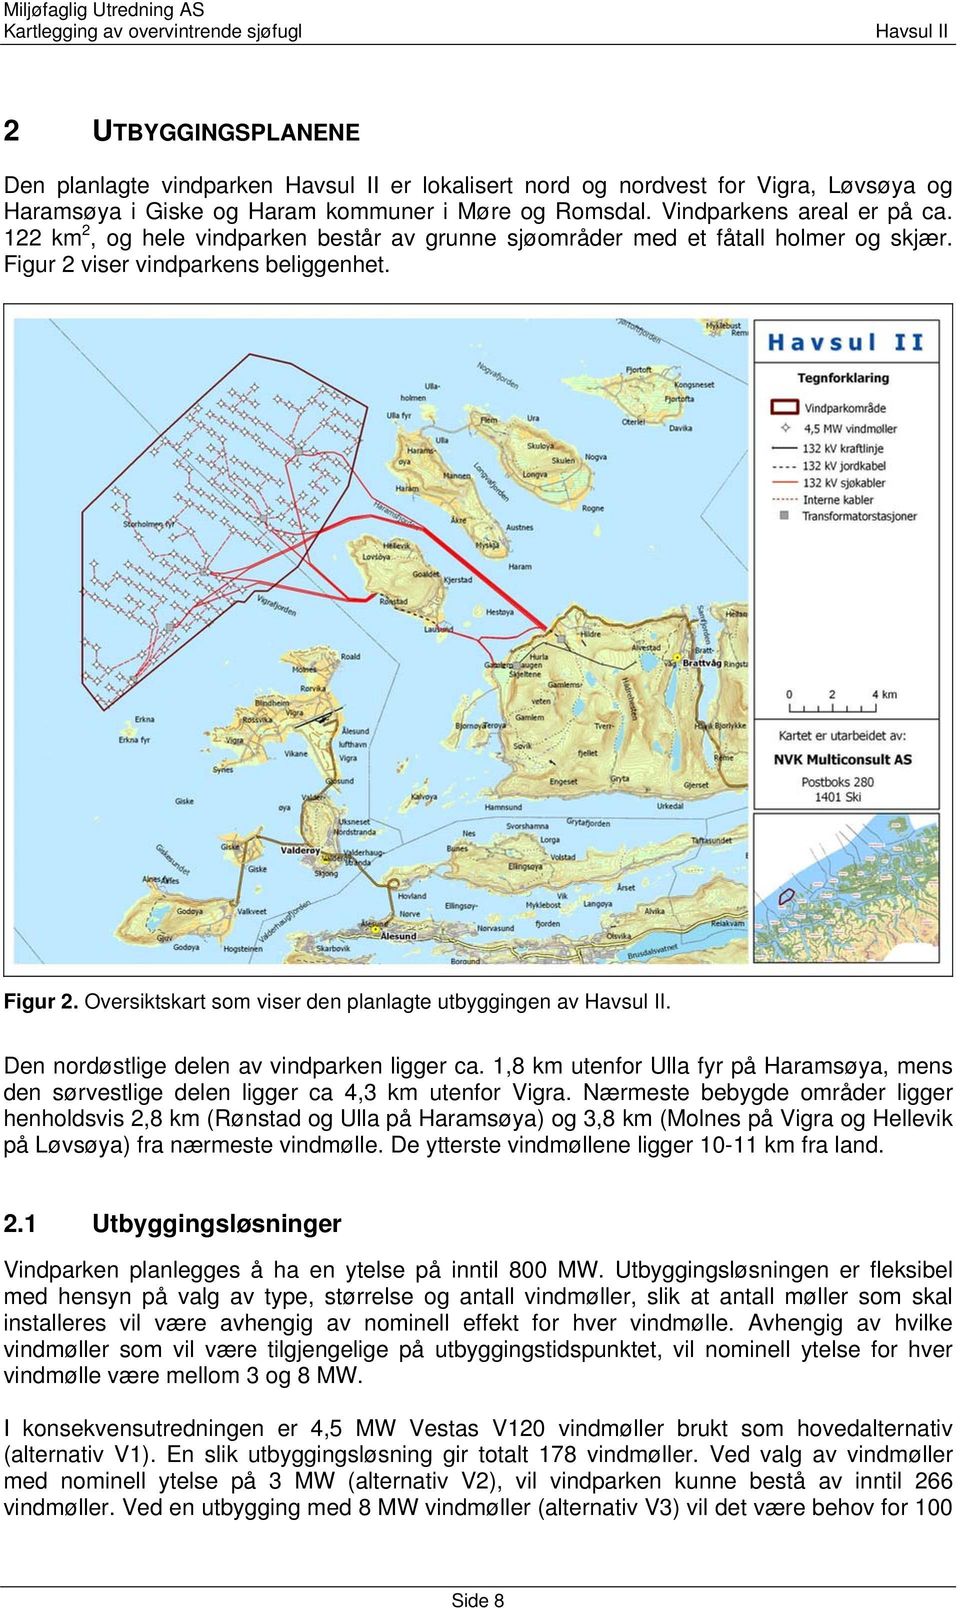 Den nordøstlige delen av vindparken ligger ca. 1,8 km utenfor Ulla fyr på Haramsøya, mens den sørvestlige delen ligger ca 4,3 km utenfor Vigra.